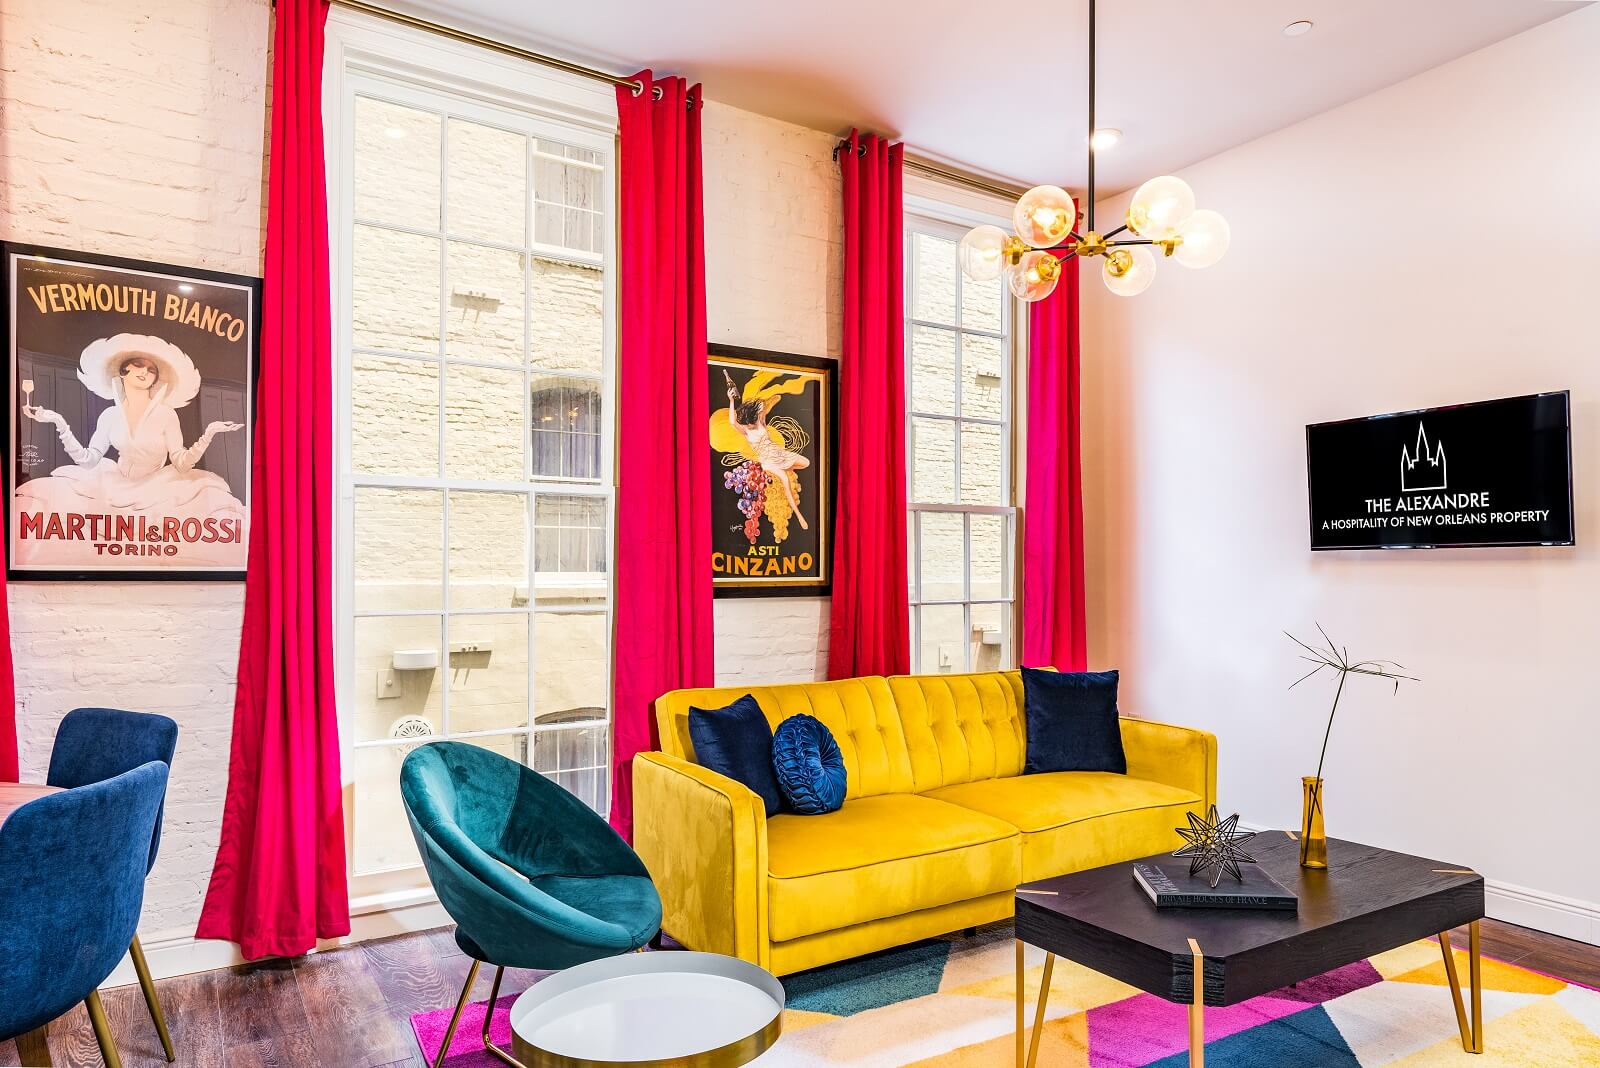 The Alexandre Unit 204, a New Orleans luxury rental.